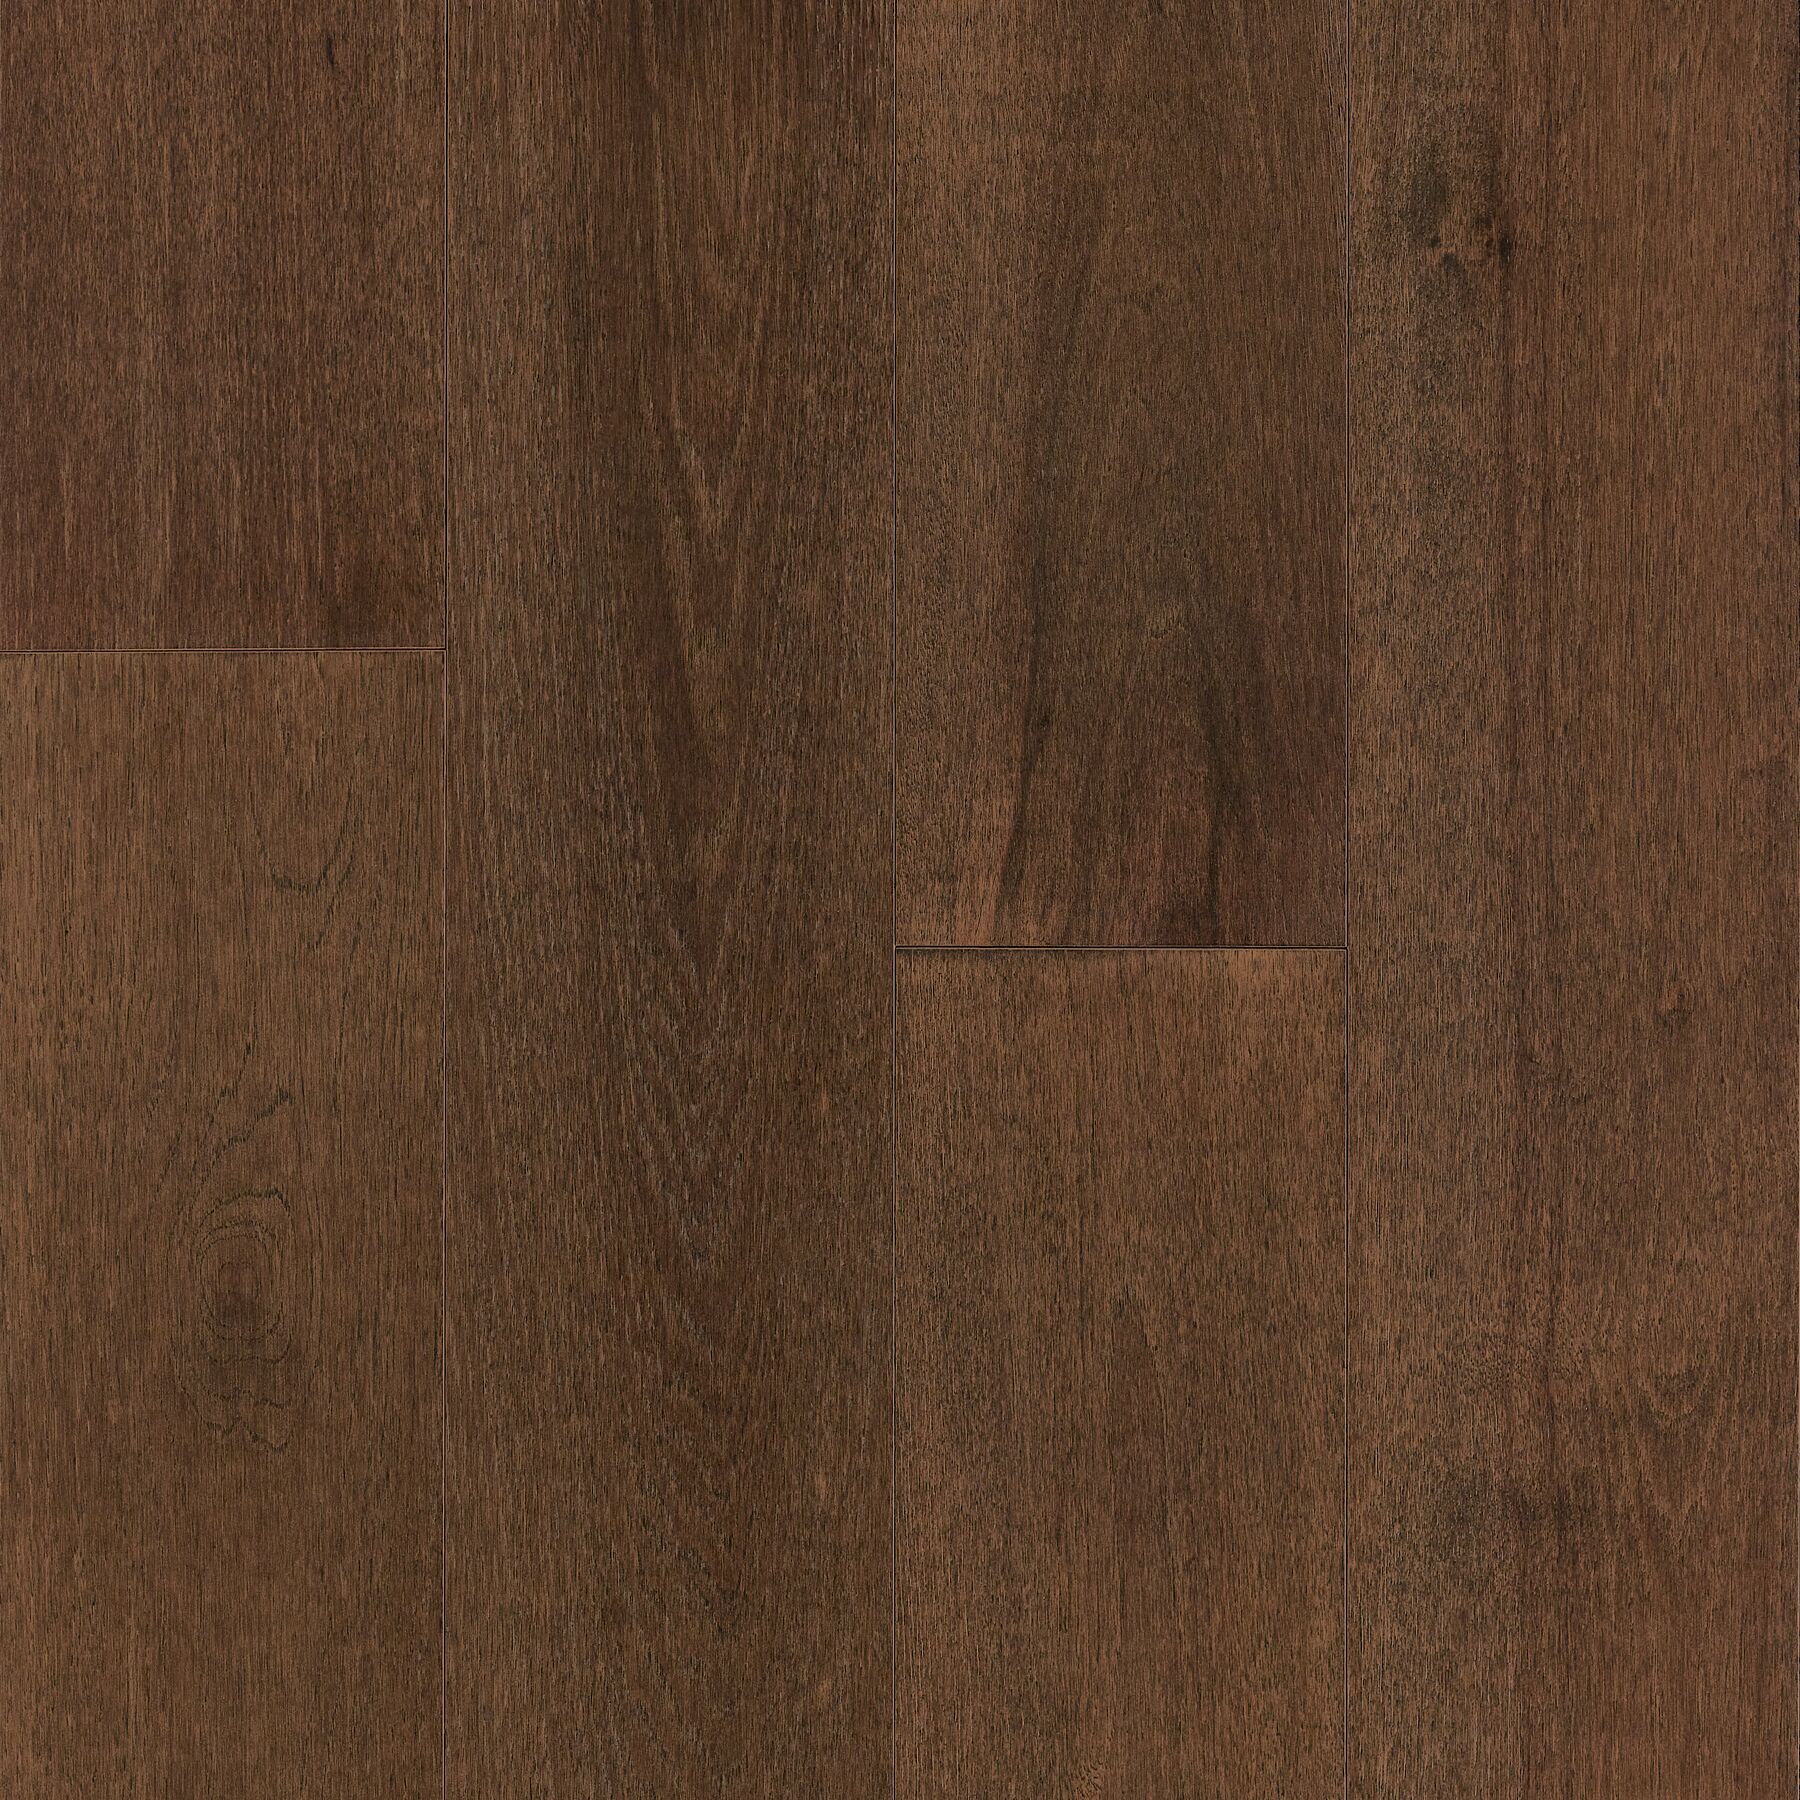 Charles Dogwood Densified Wood Flooring with hardened wood